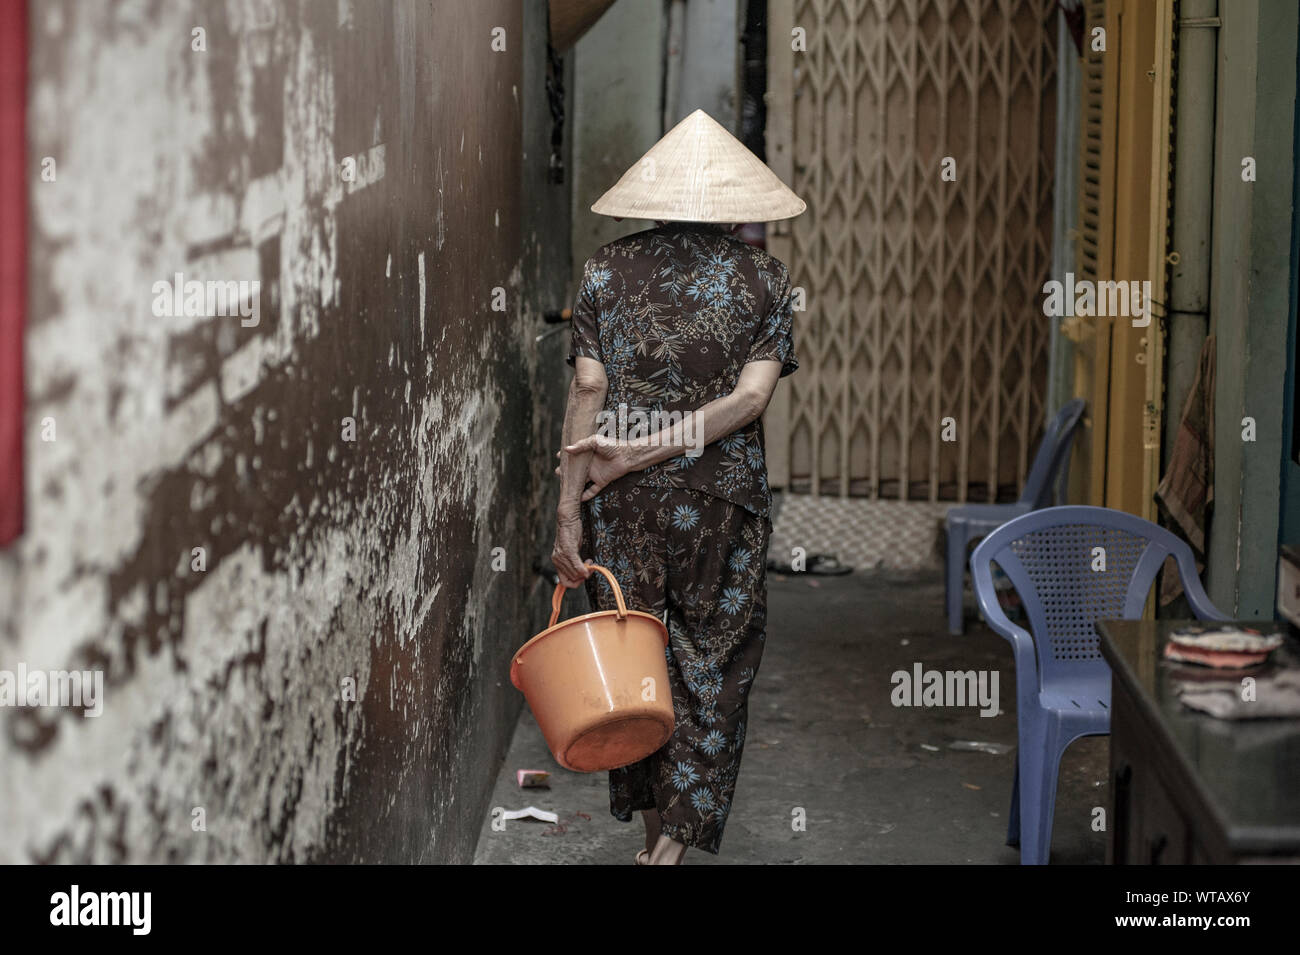 Old woman wears Nao La hat carrying a bucket in Saigon alleys Stock Photo